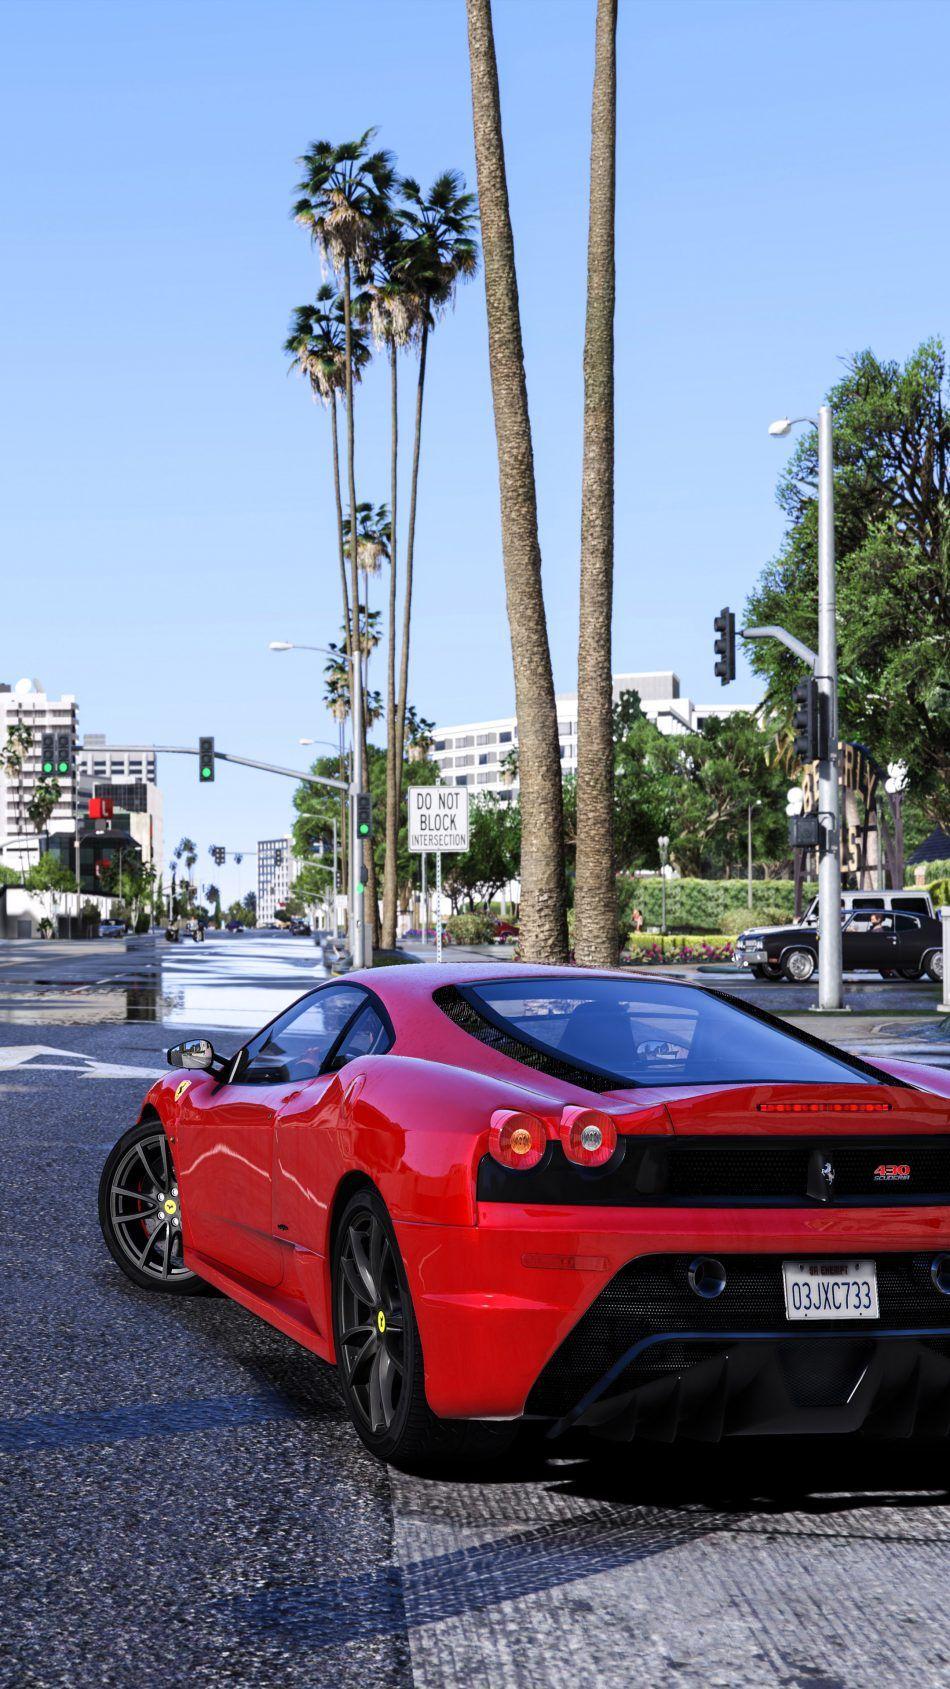 GTA V Red Ferrari. Gta, Gta pc, Ferrari